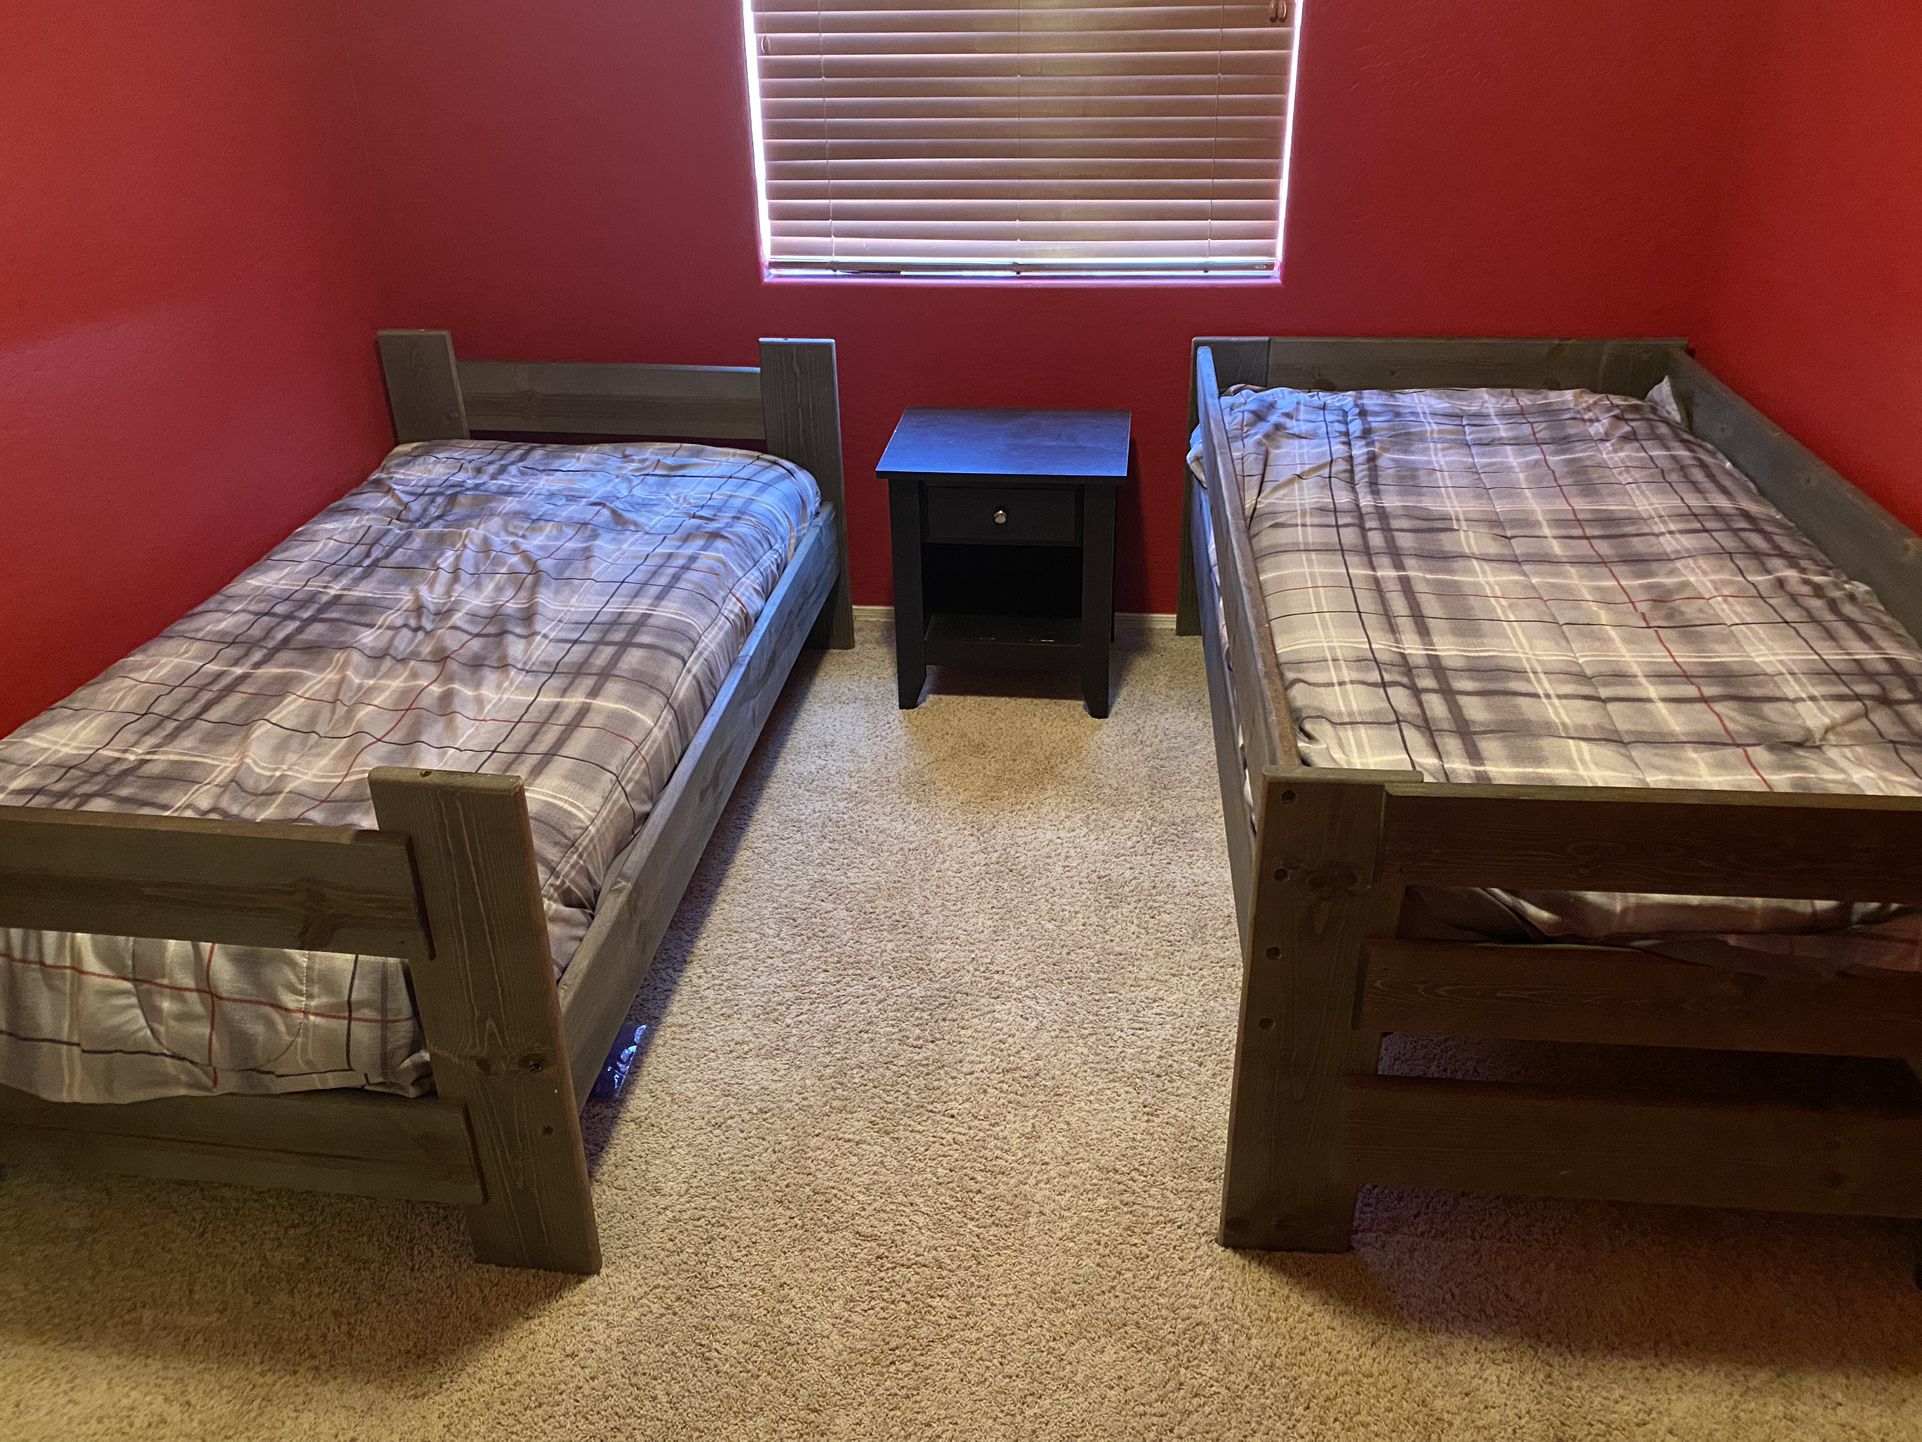 Twin Stackable Bunk Beds